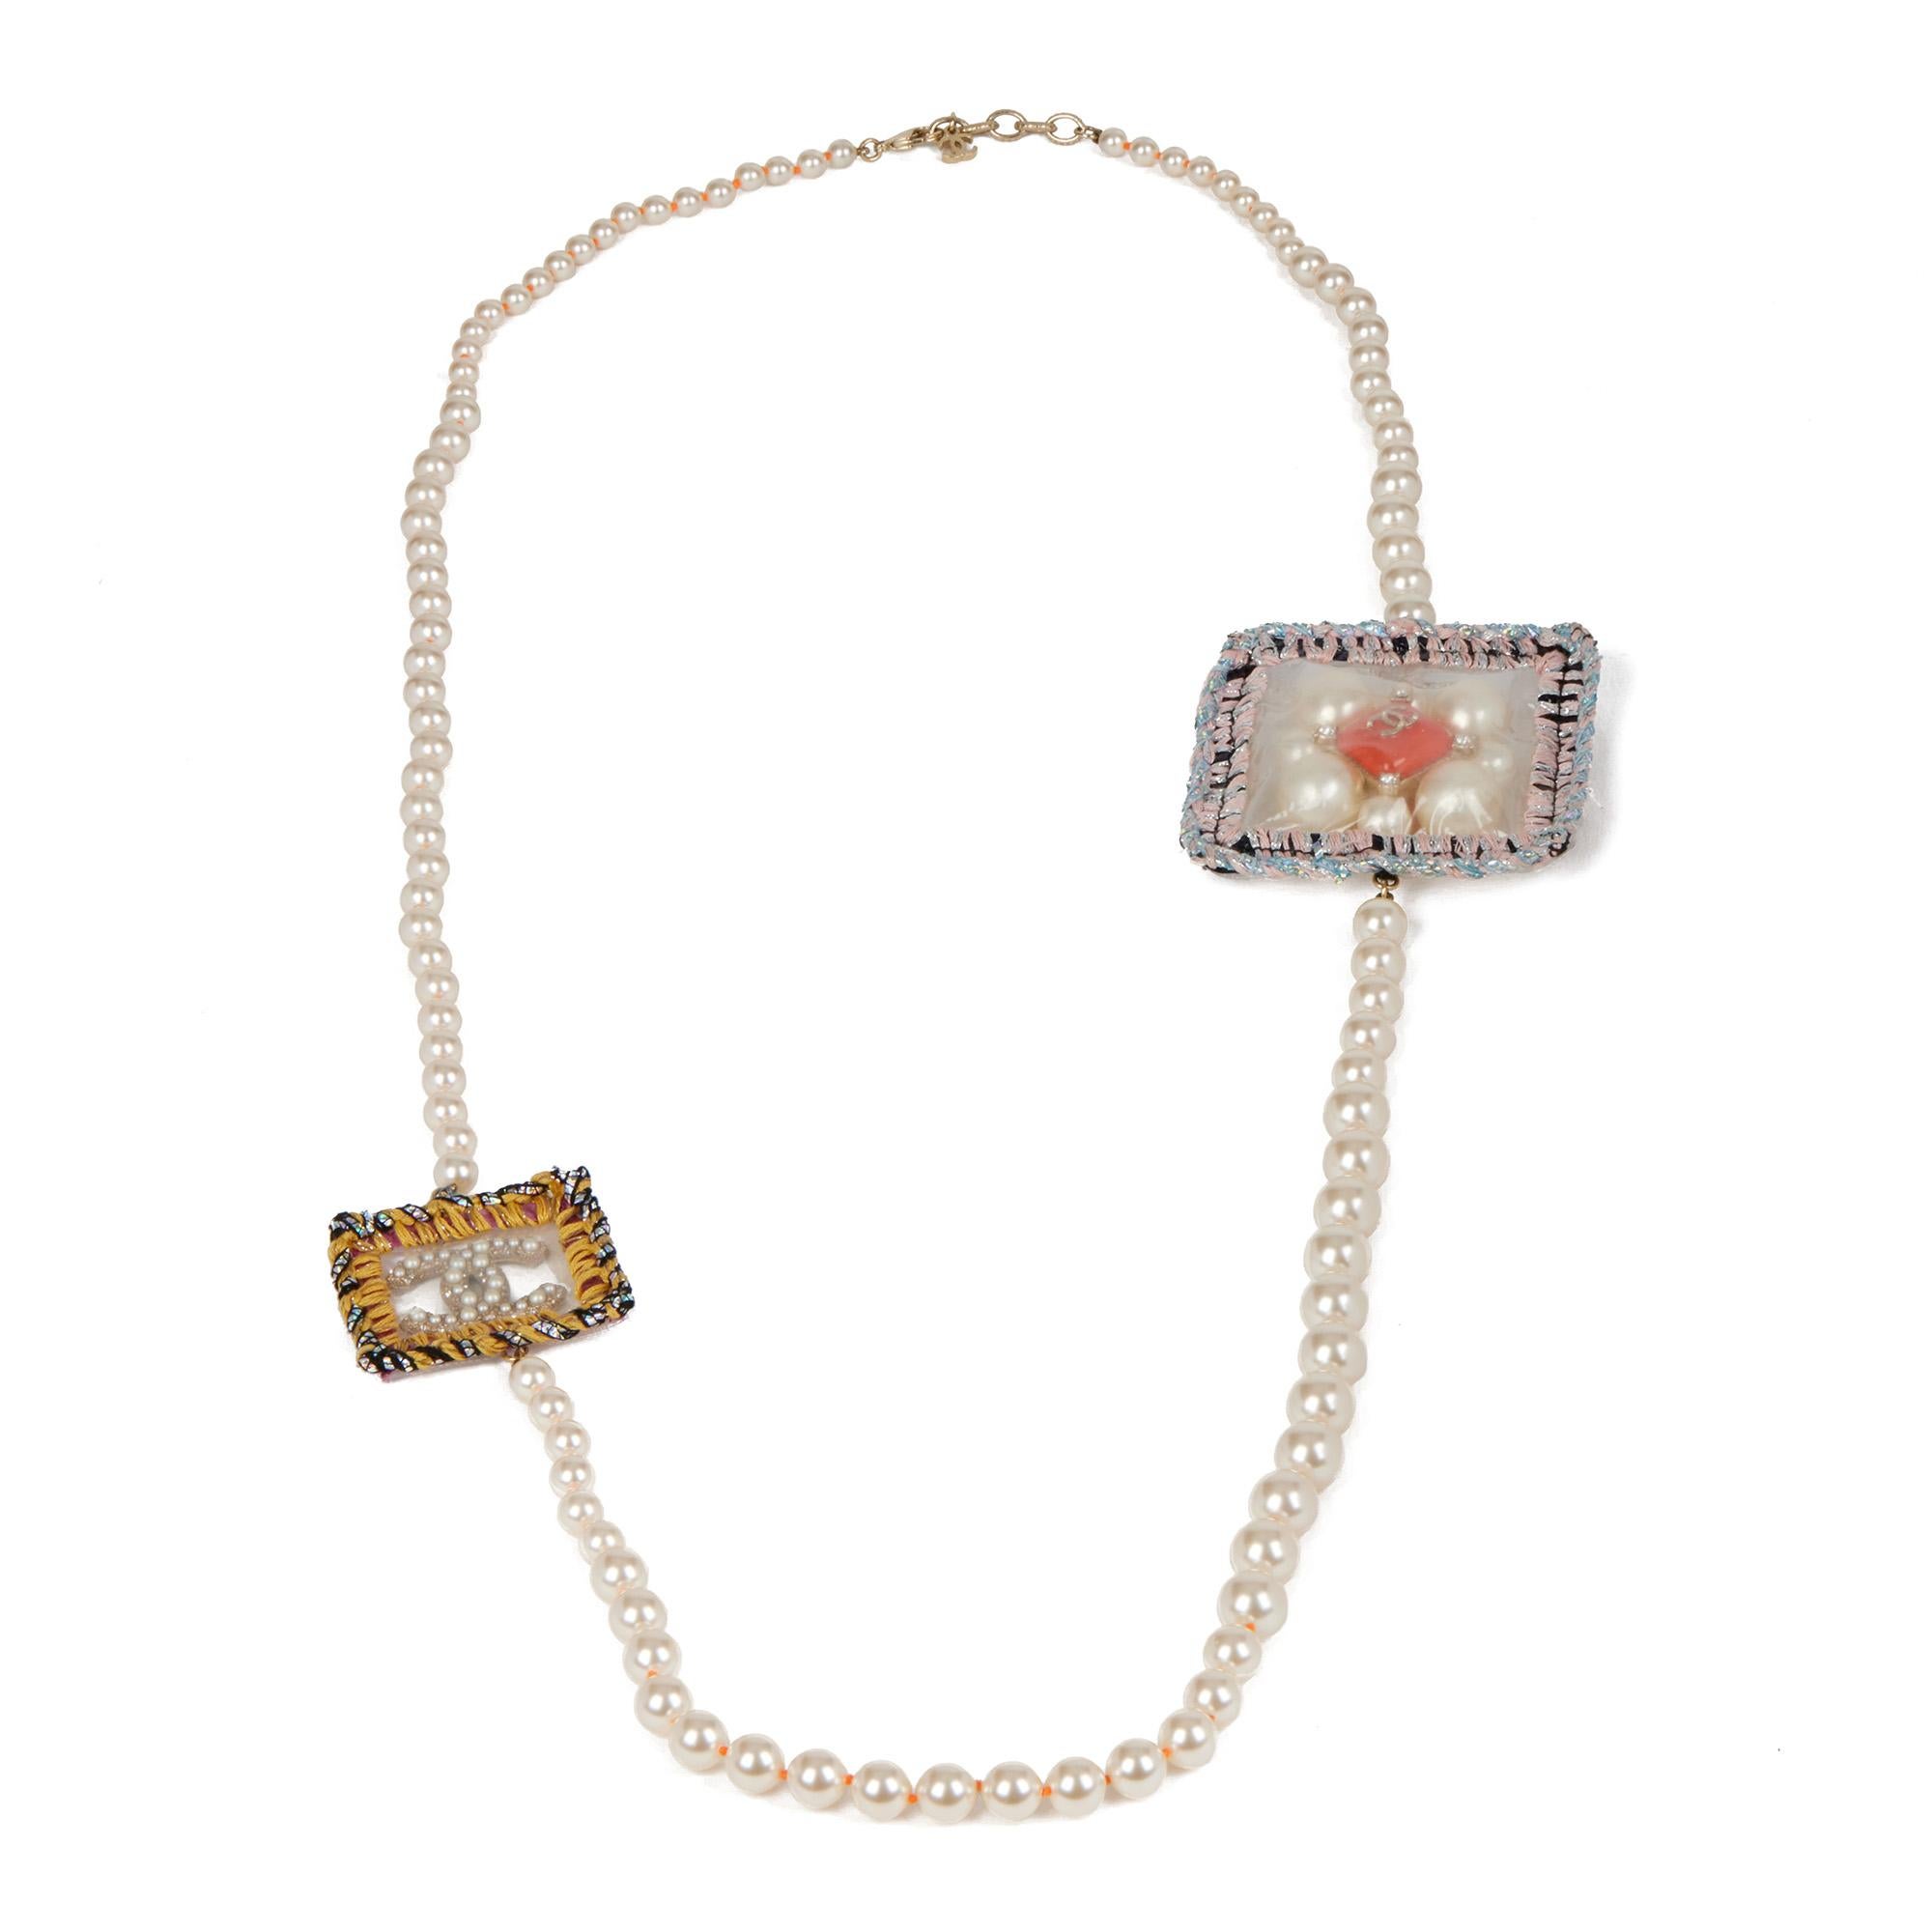 Chanel Supermarket Collection Necklace In Excellent Condition For Sale In Bishop's Stortford, Hertfordshire